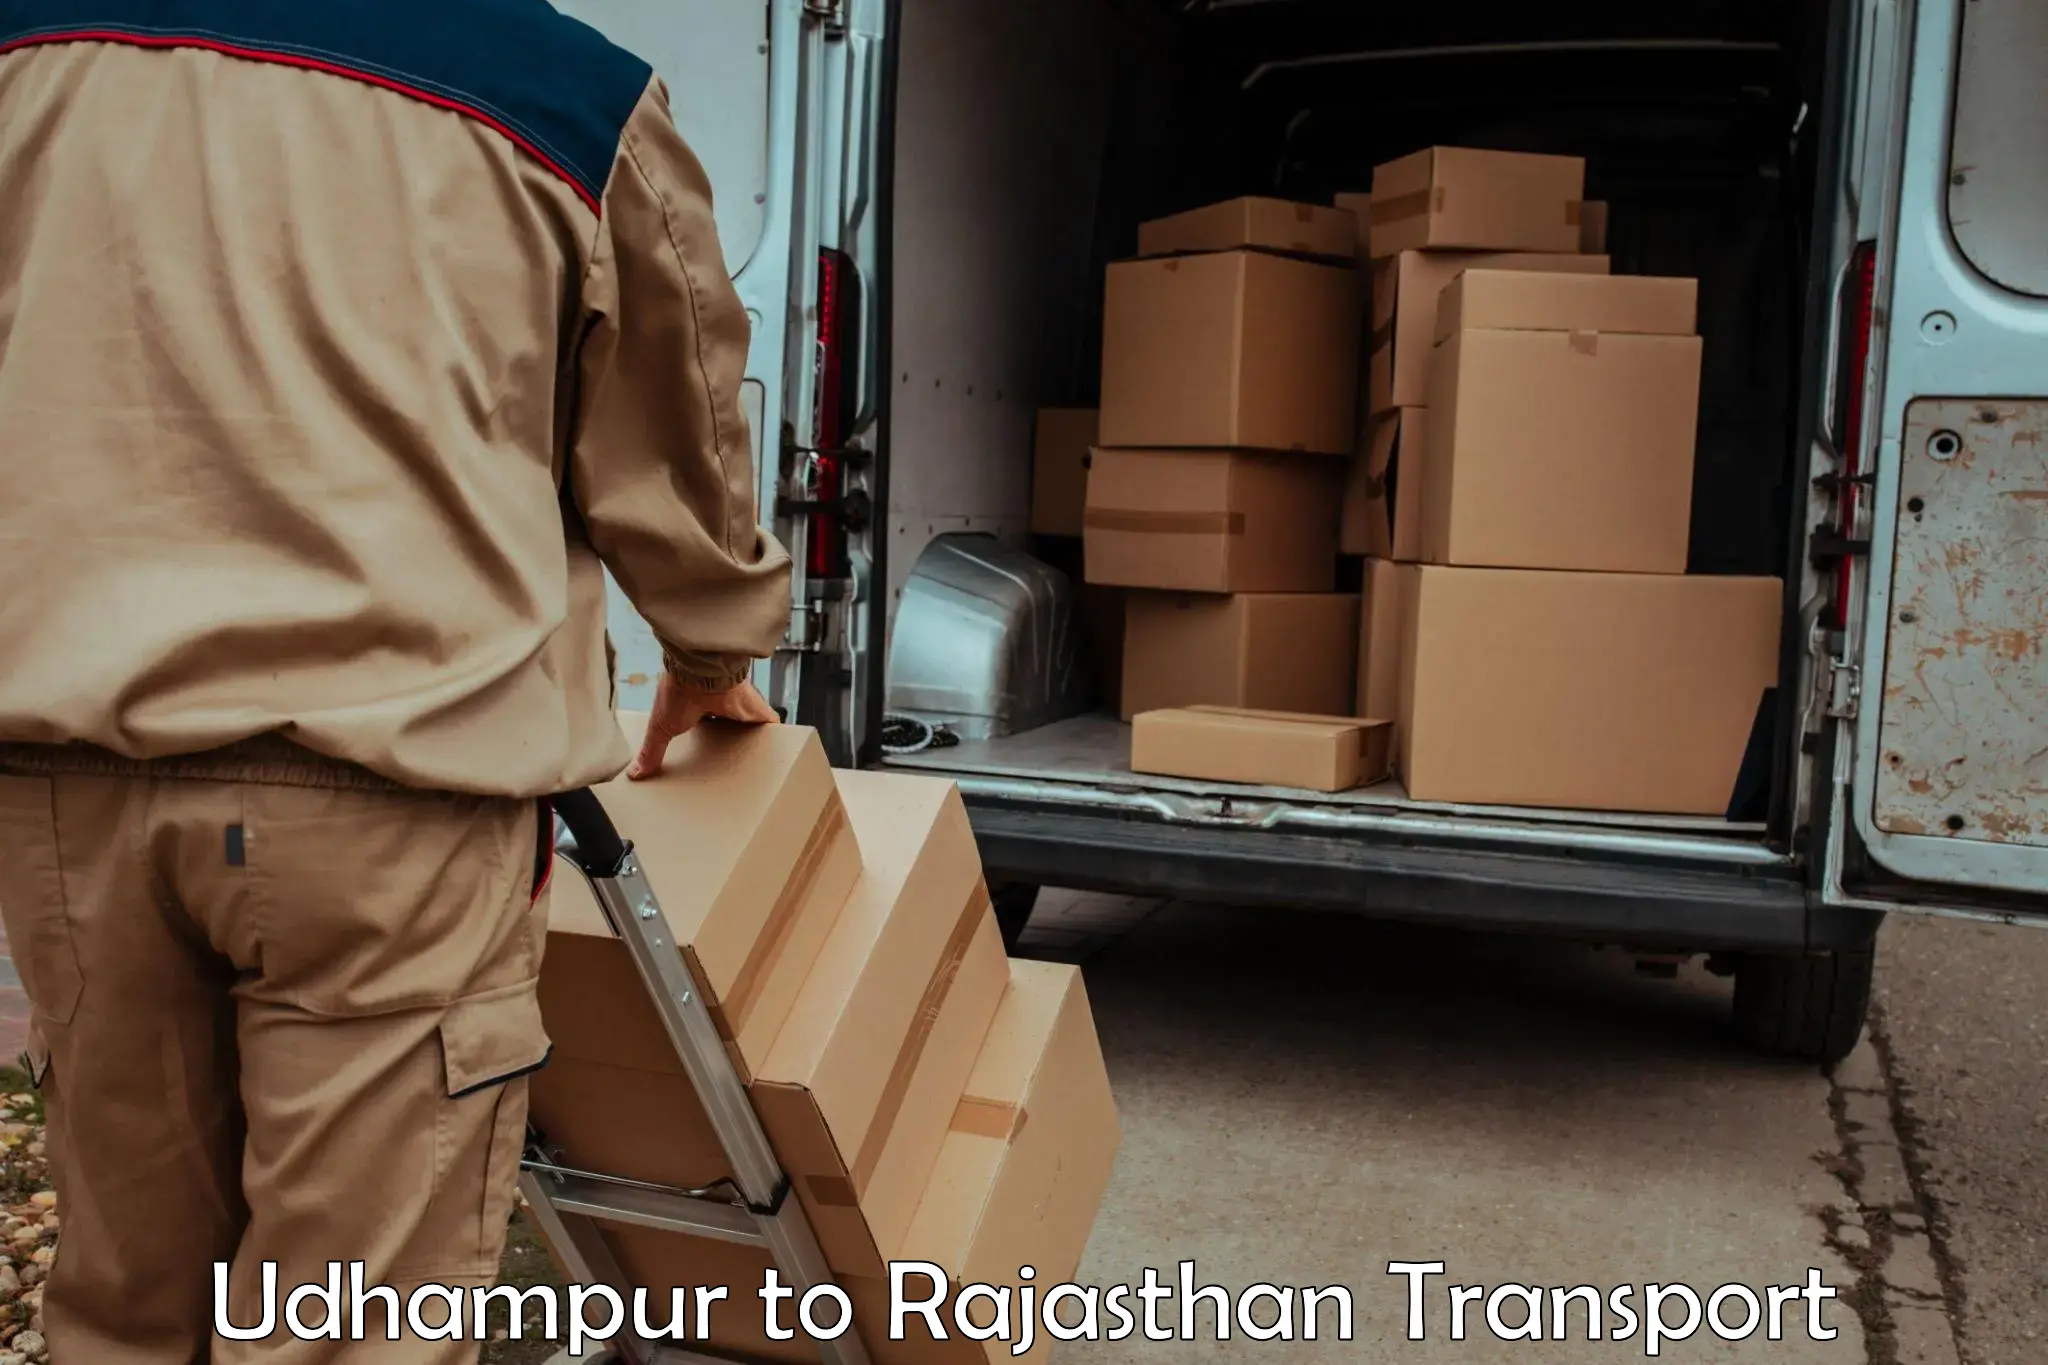 Truck transport companies in India Udhampur to Mandalgarh